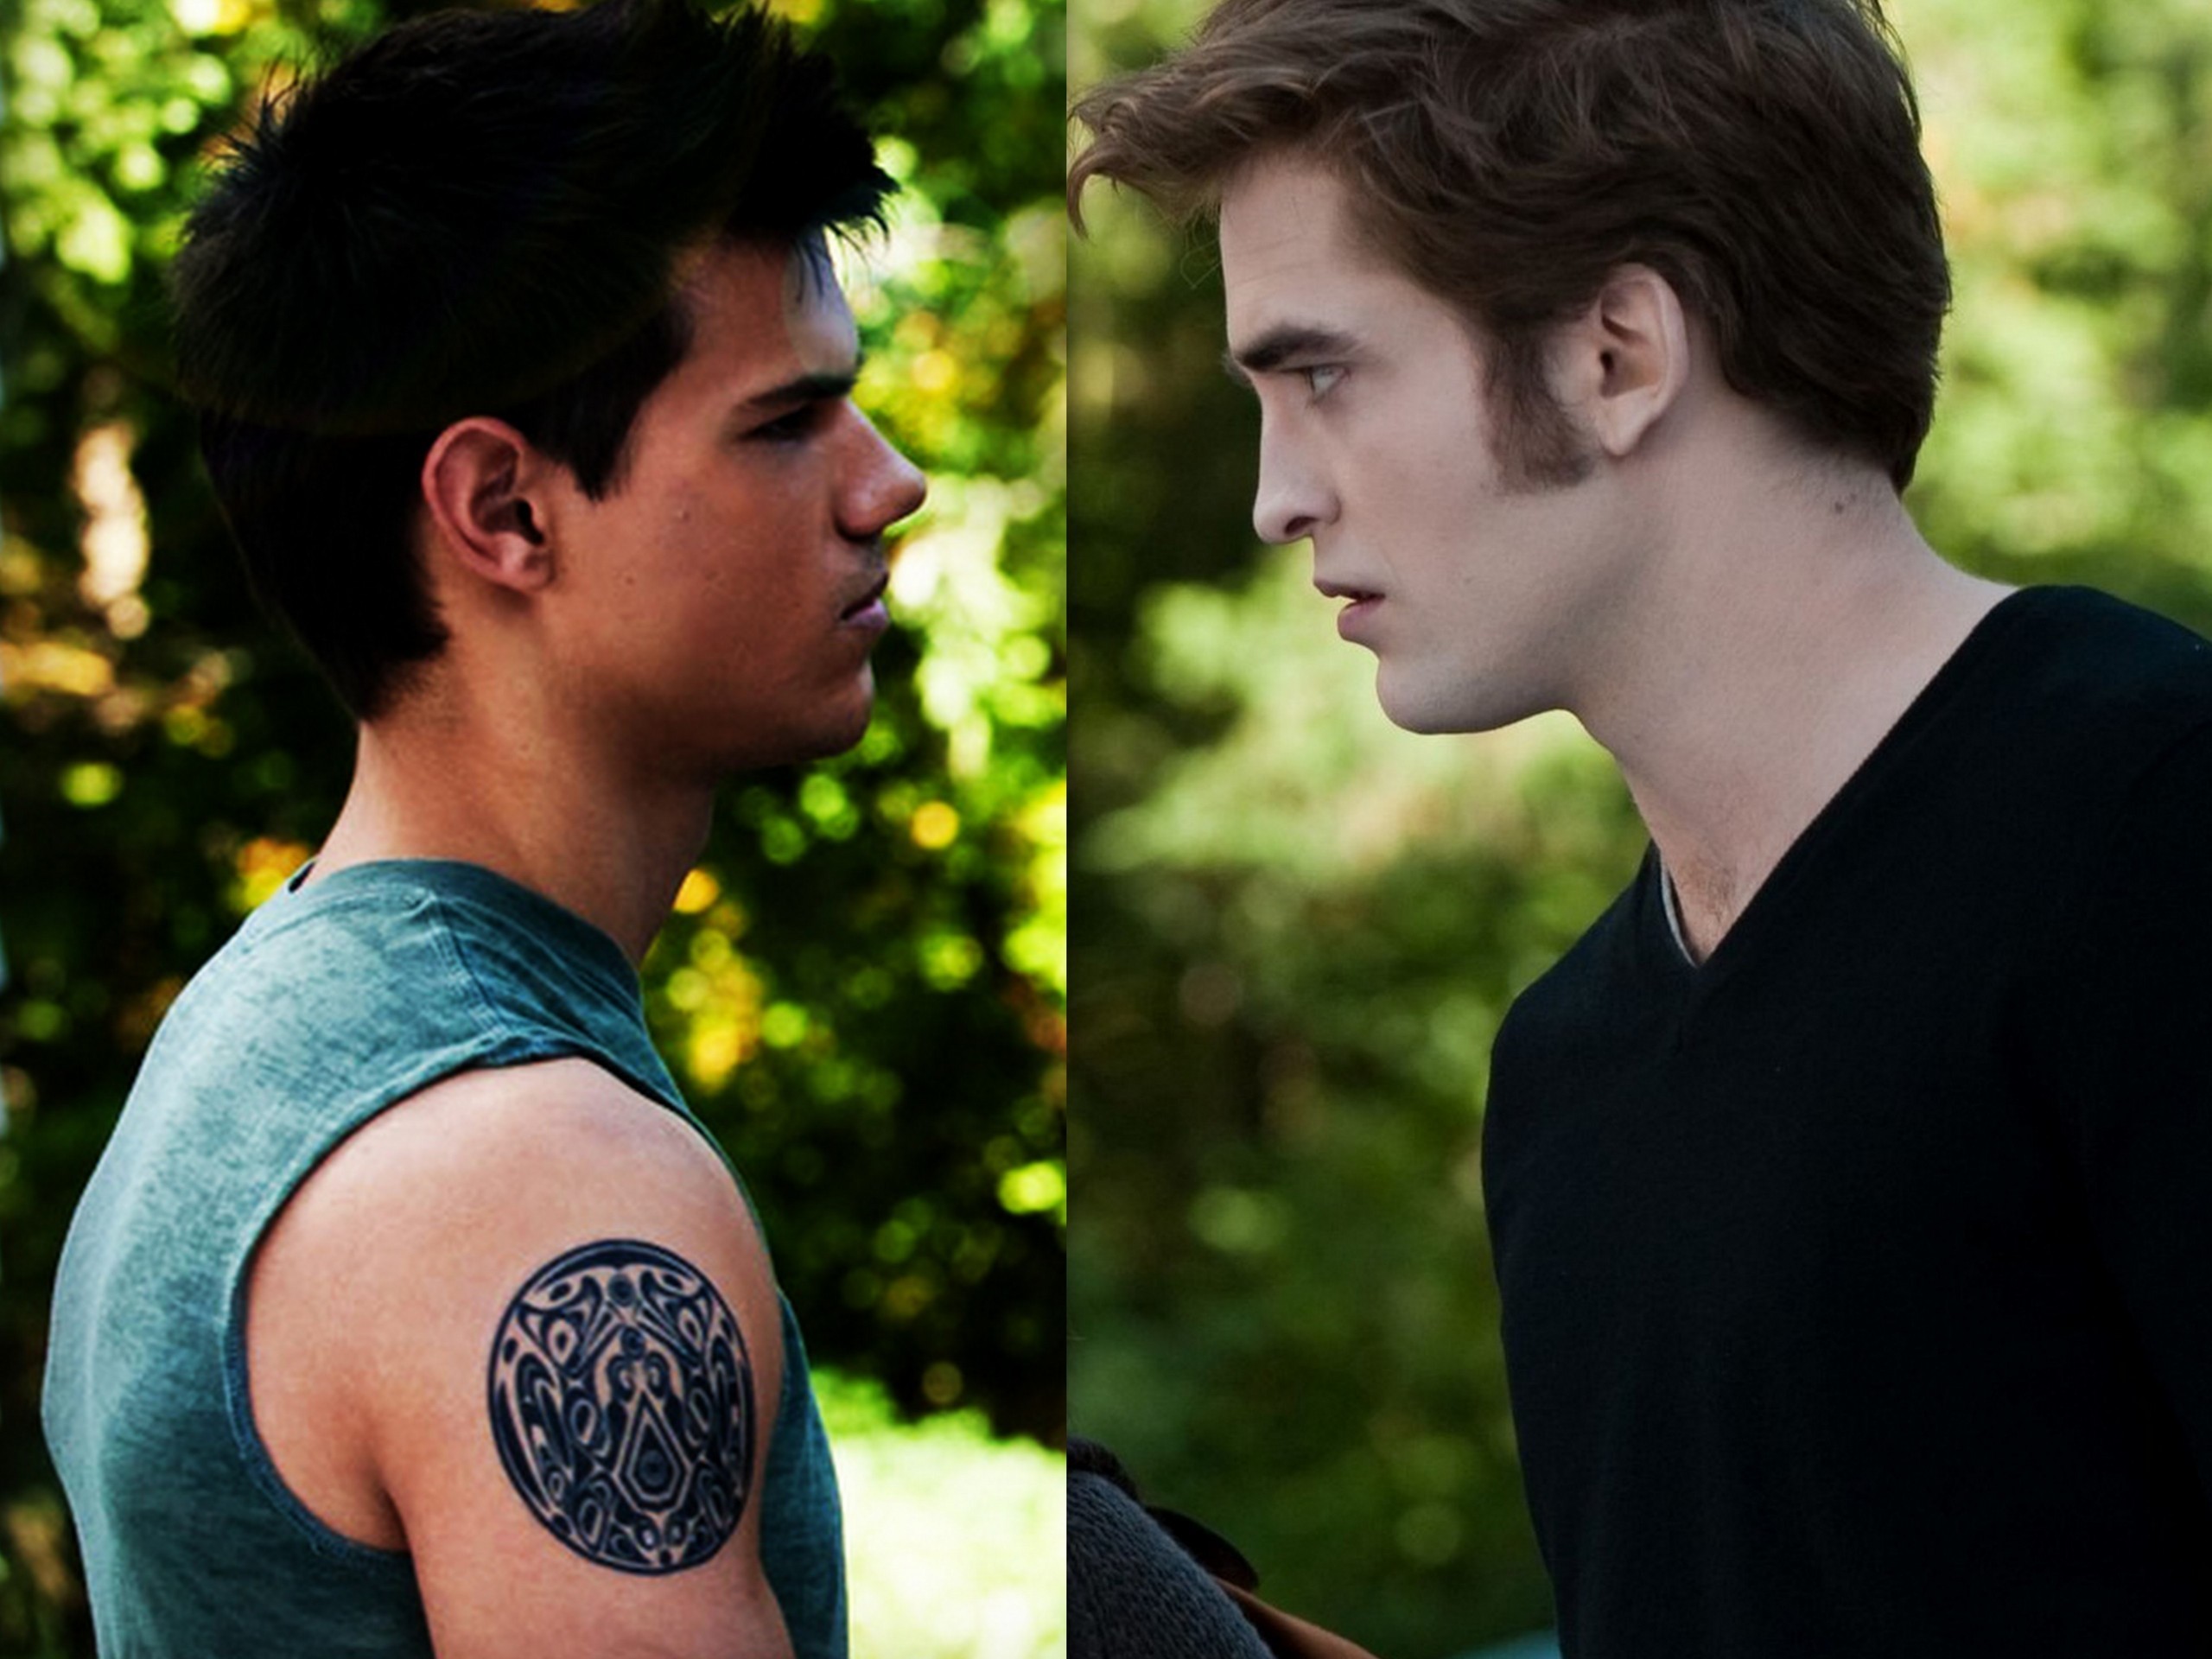 The Twilight saga: Eclipse Images on Fanpop.